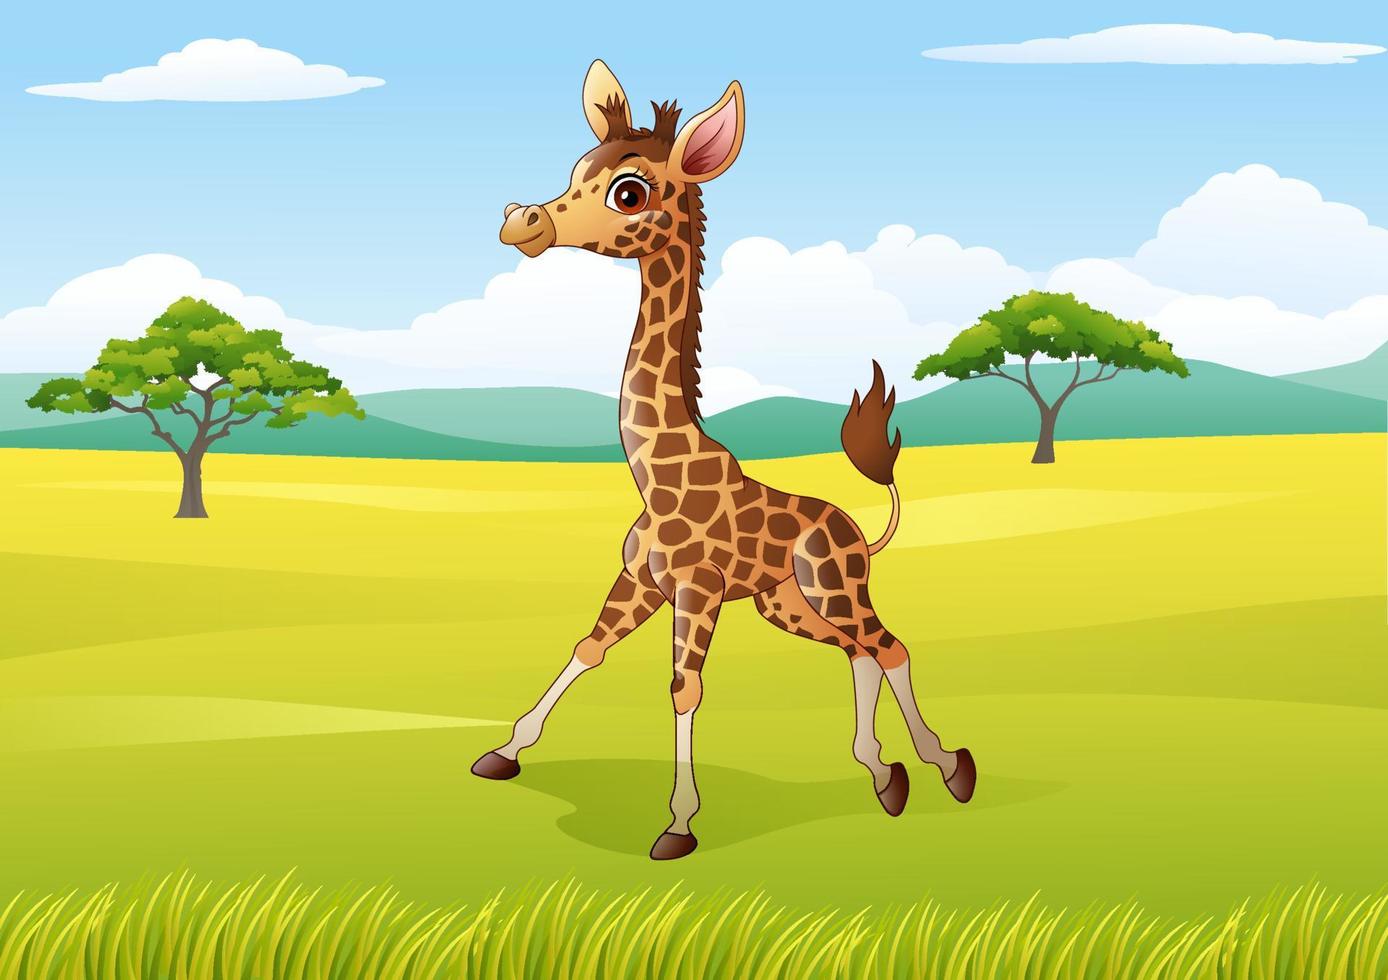 Cartoon Happy giraffe in the African landscape vector